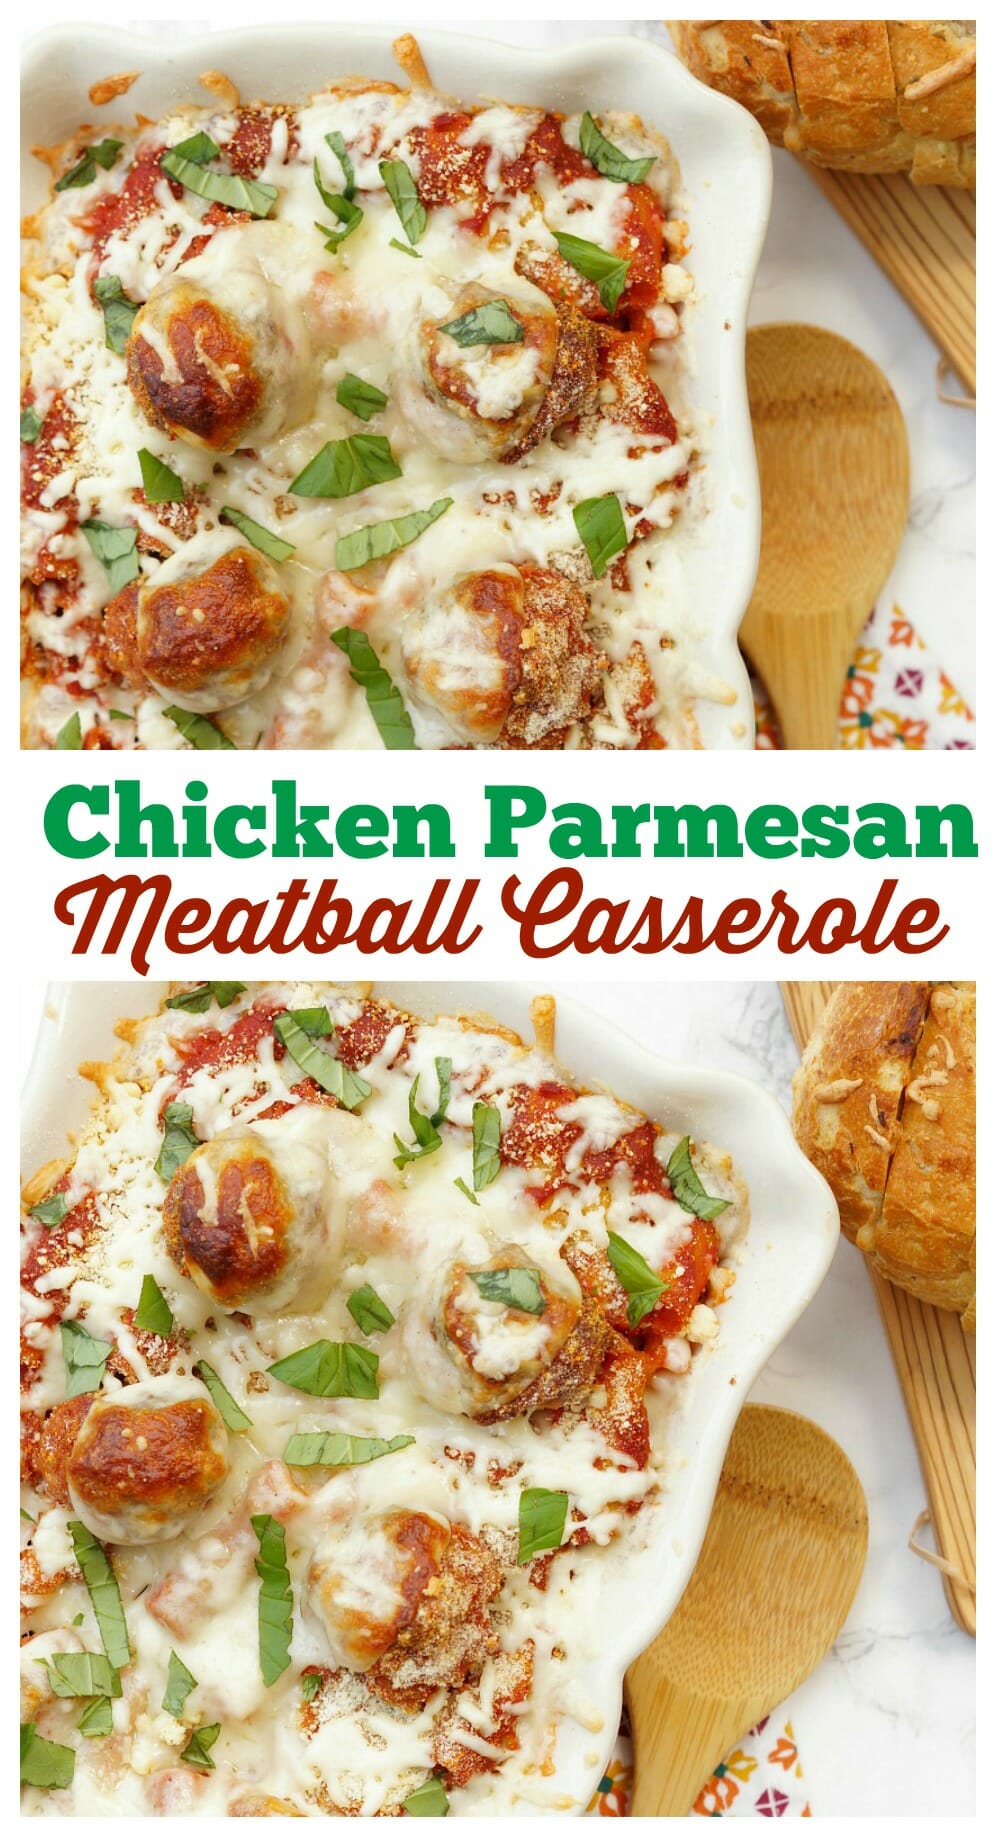 Chicken Parmesan Meatball Casserole, the perfect comfort food dinner recipe!